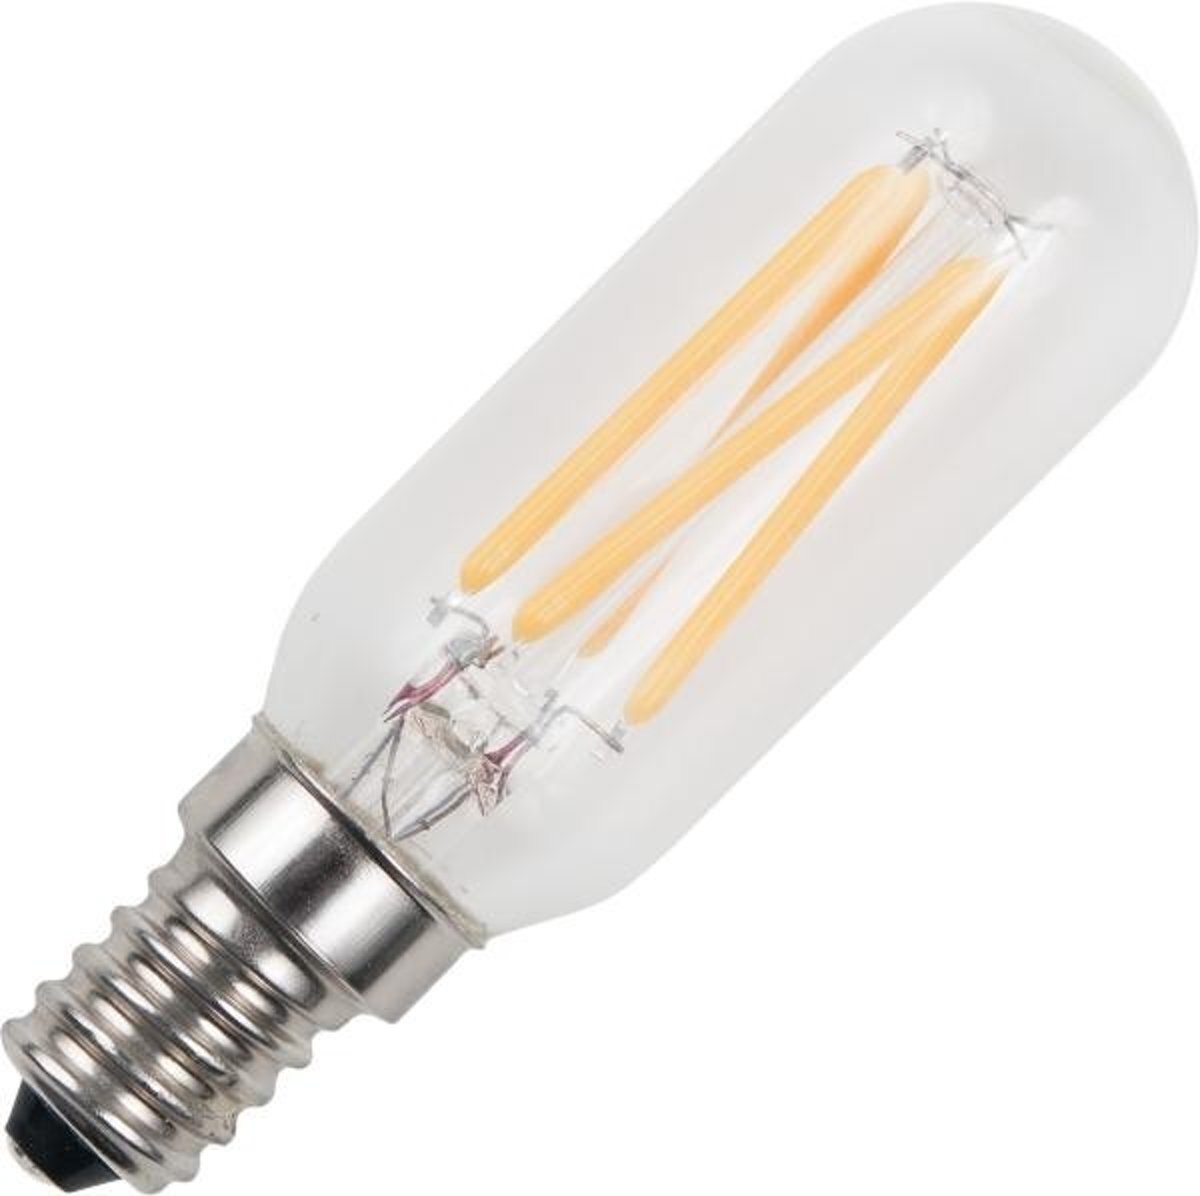 SPL buislamp LED filament 4W (vervangt 40W) kleine fitting E14 25x85mm